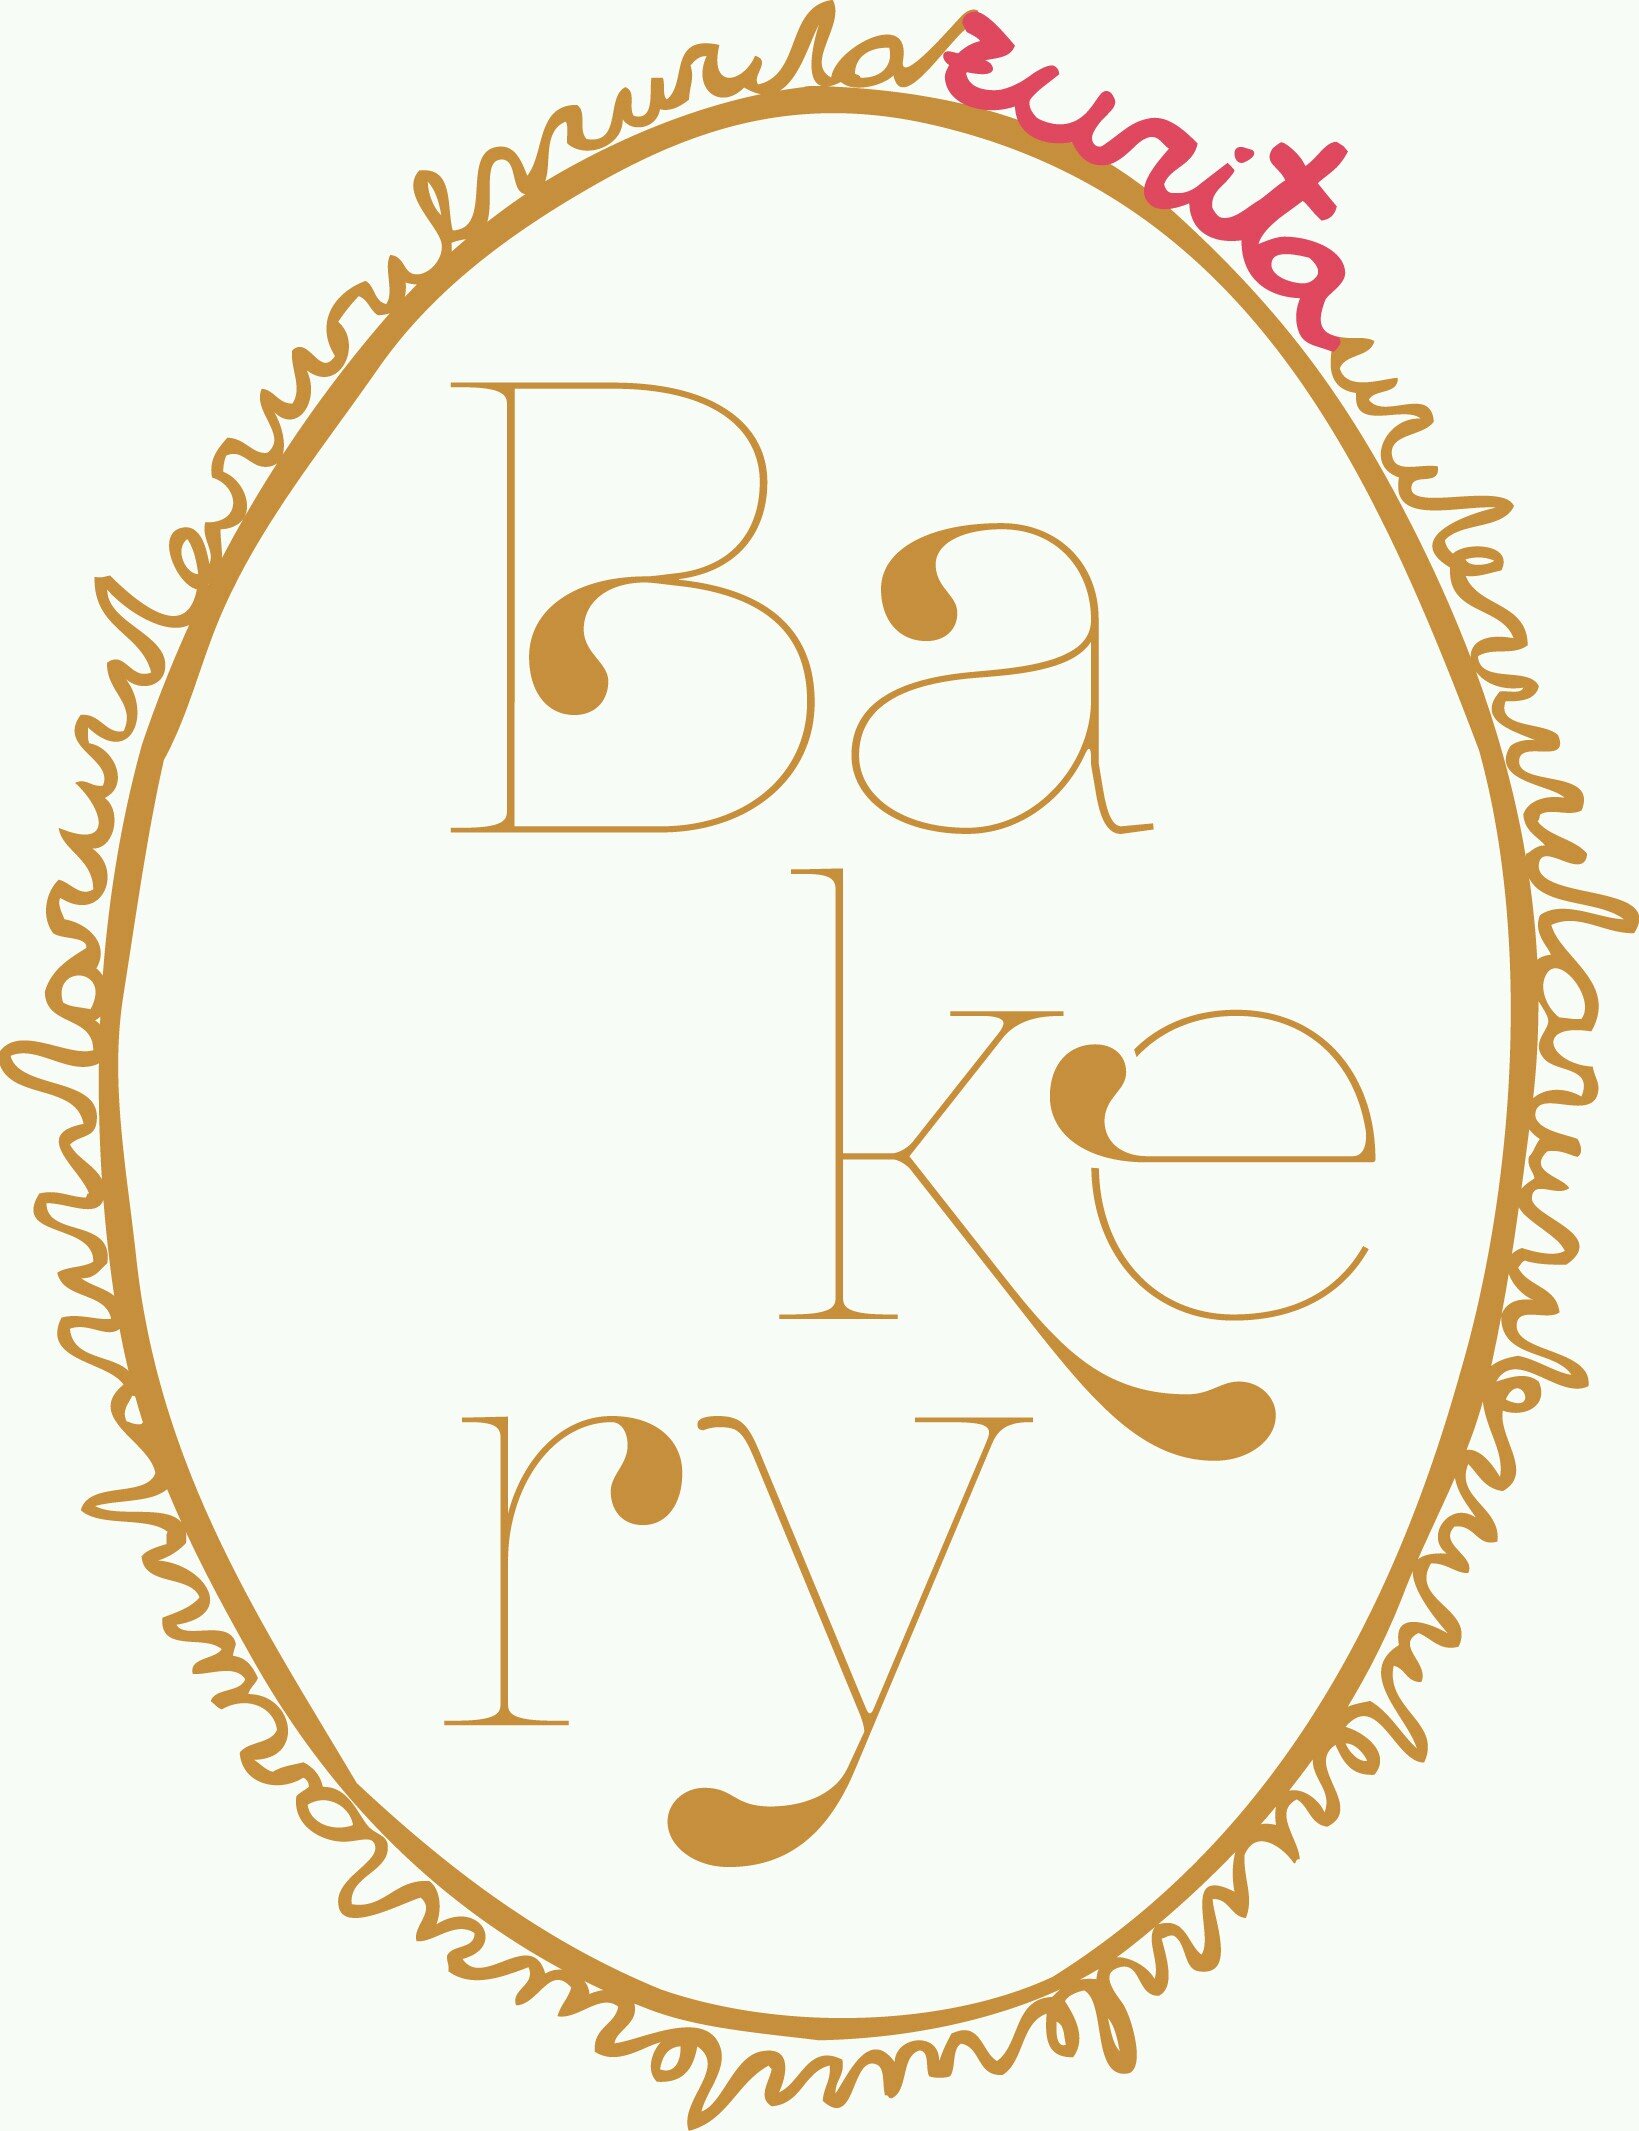 Bakery&Cakes